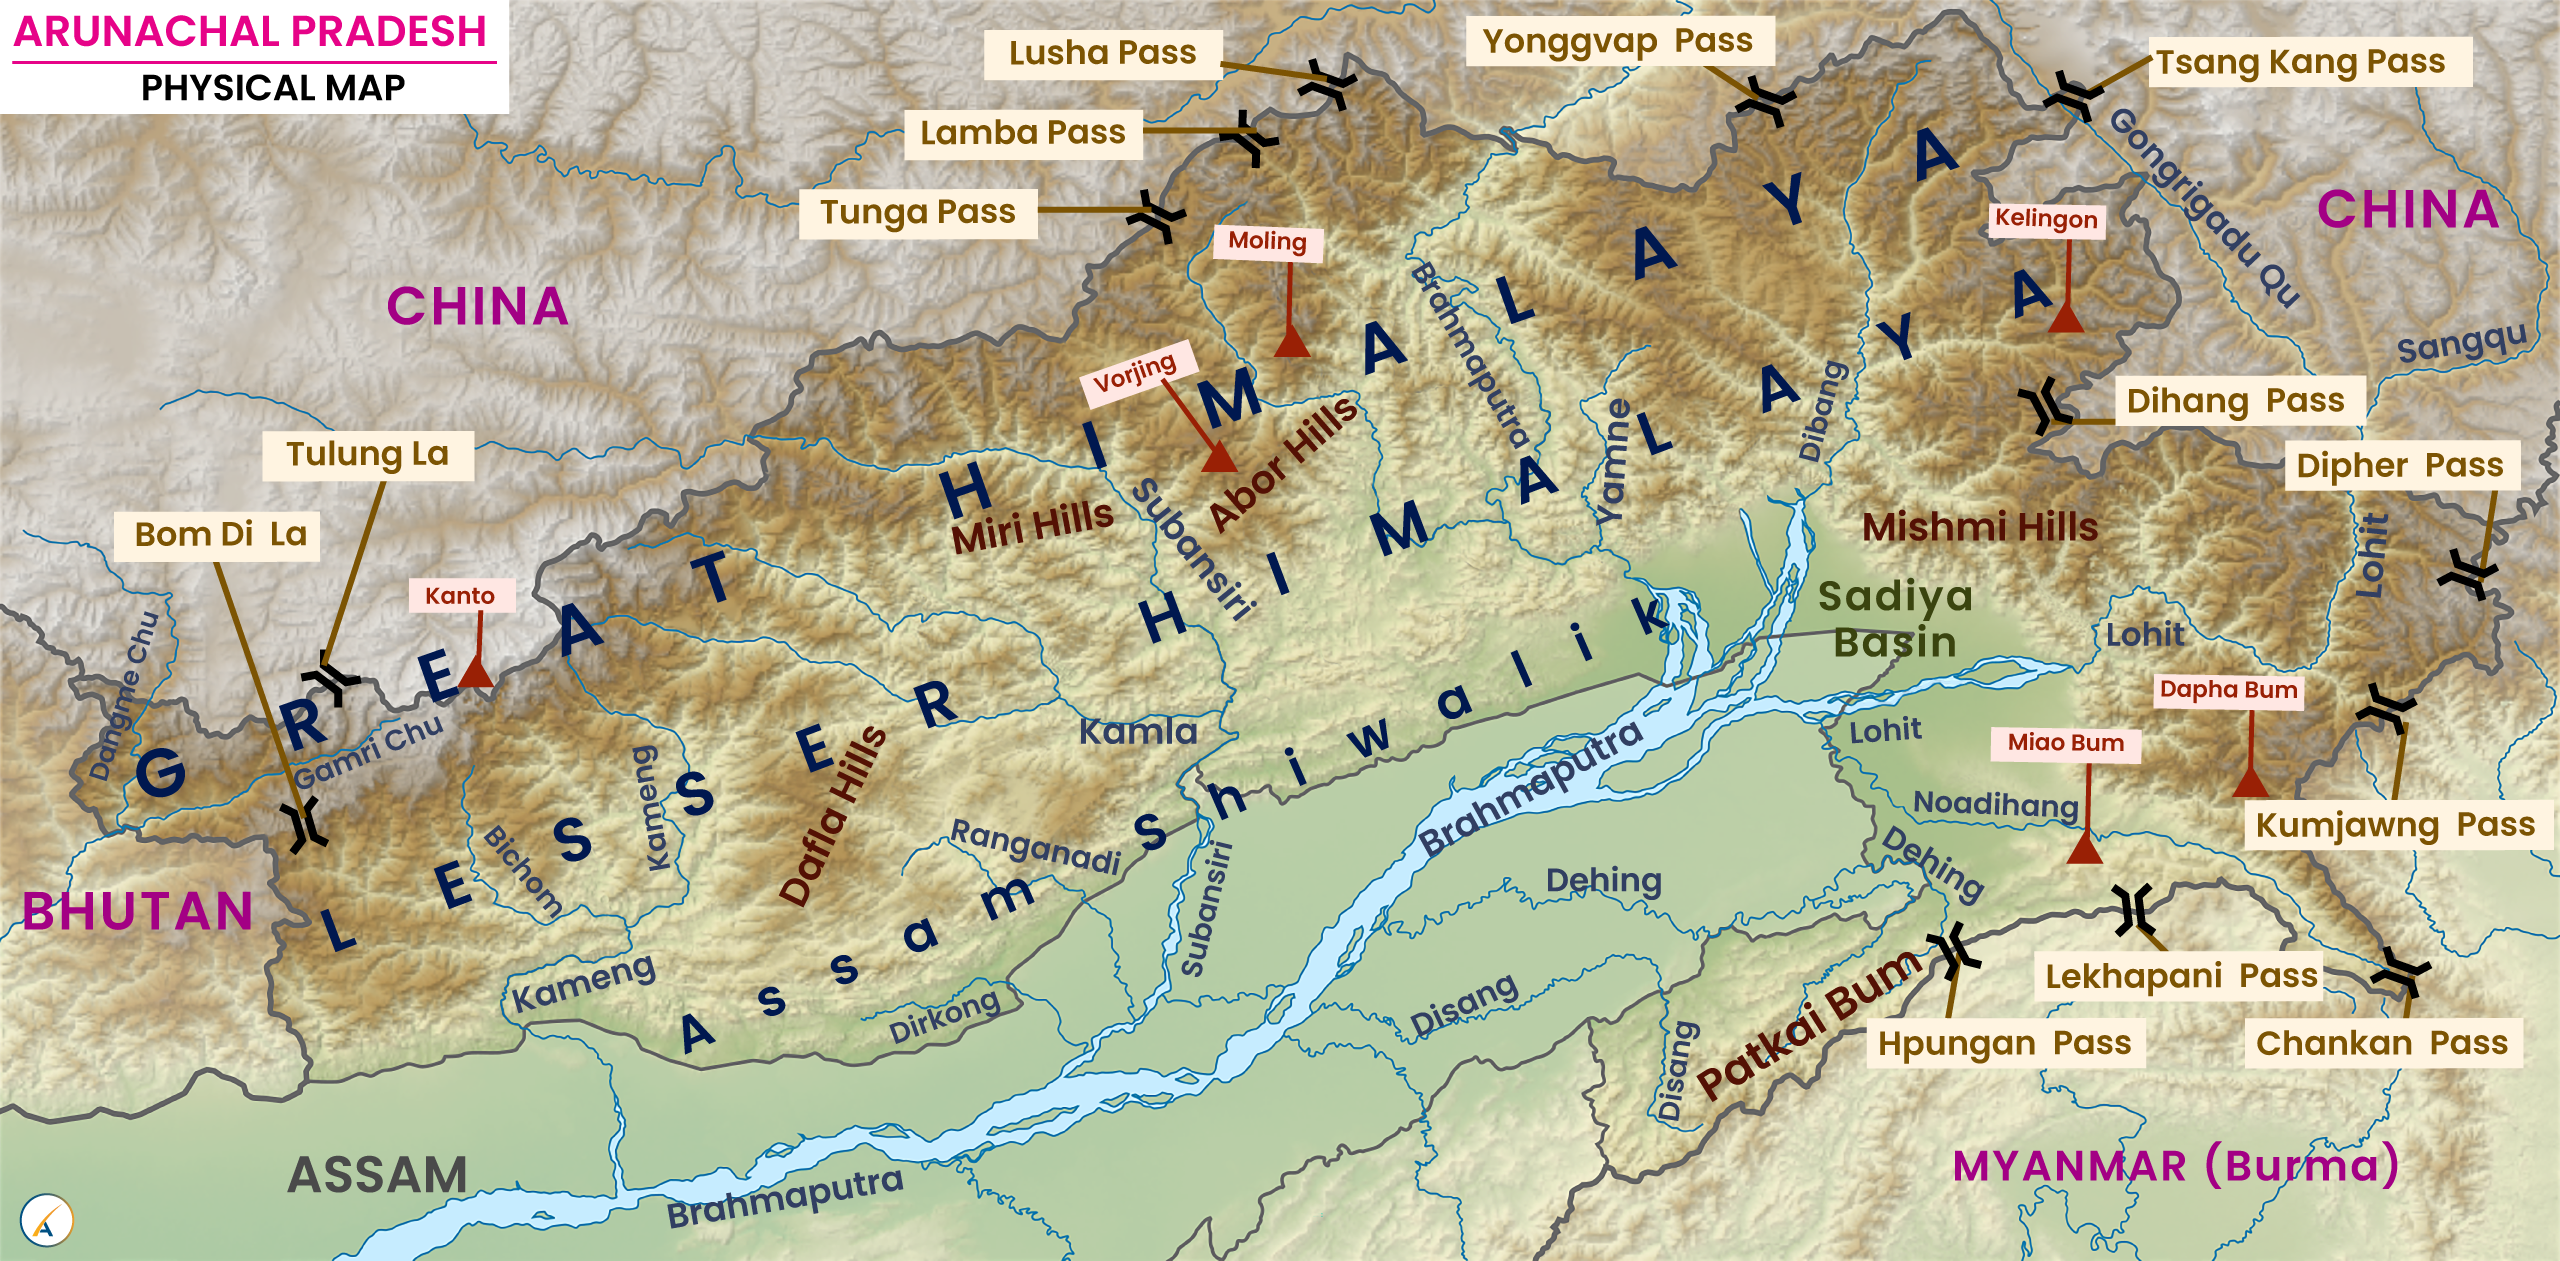 Arunachal Pradesh Physical Map